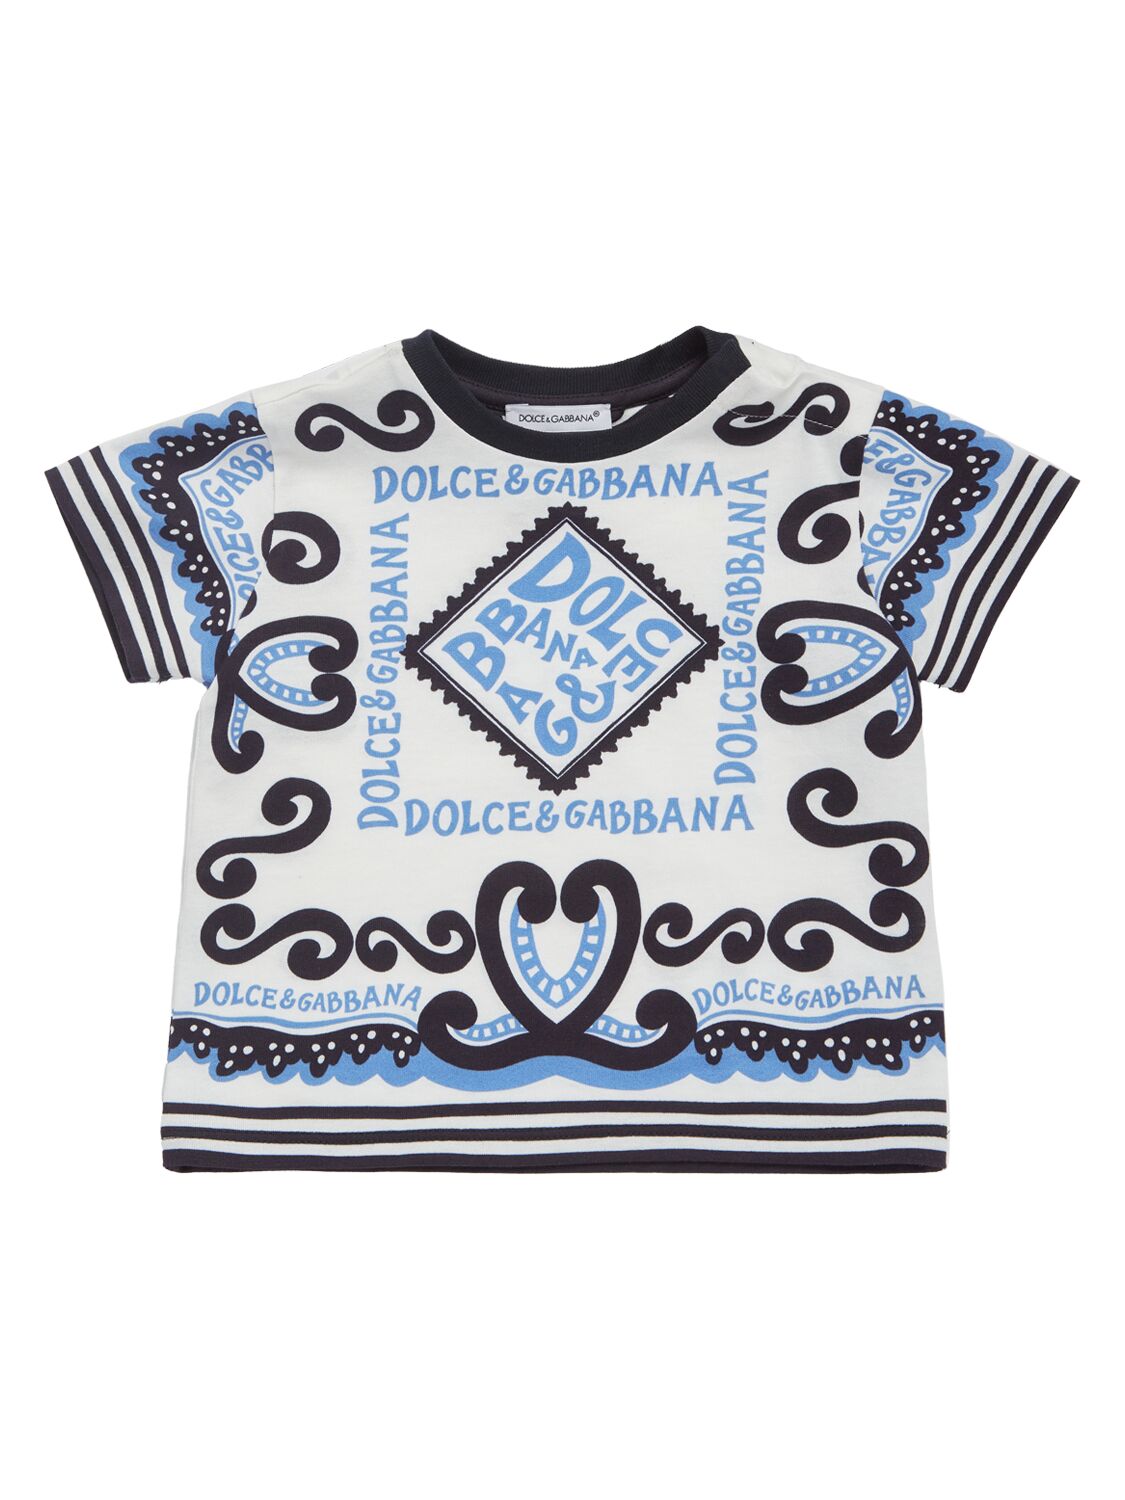 Dolce & Gabbana Kids' Bedrucktes T-shirt Aus Baumwolljersey In Weiss,blau